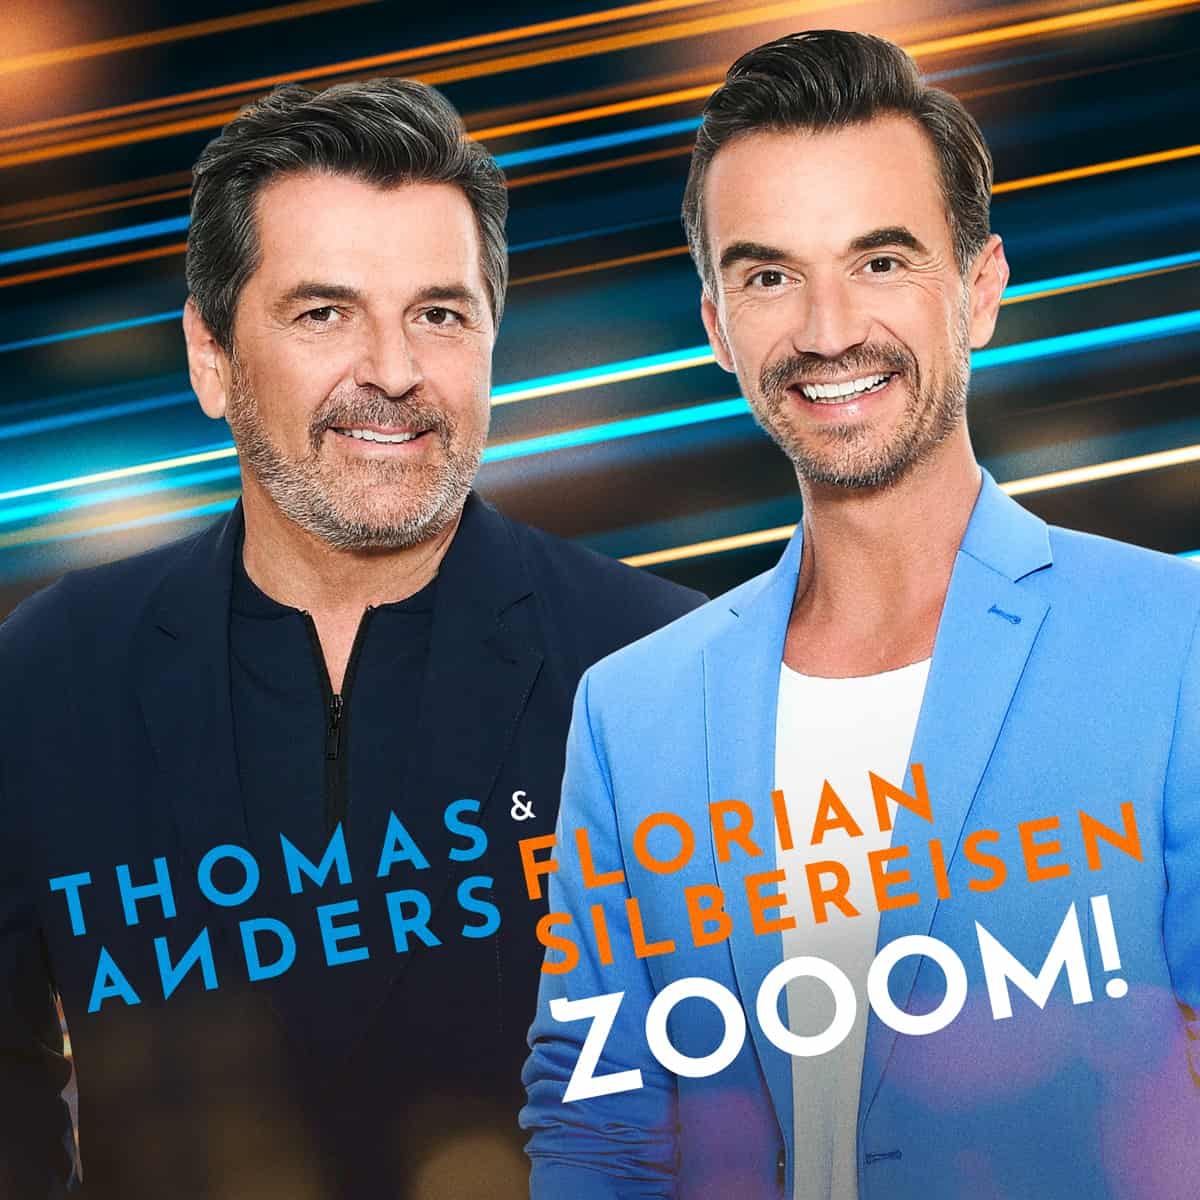 Thomas Anders & Florian Silbereisen - Zooom! (2021)